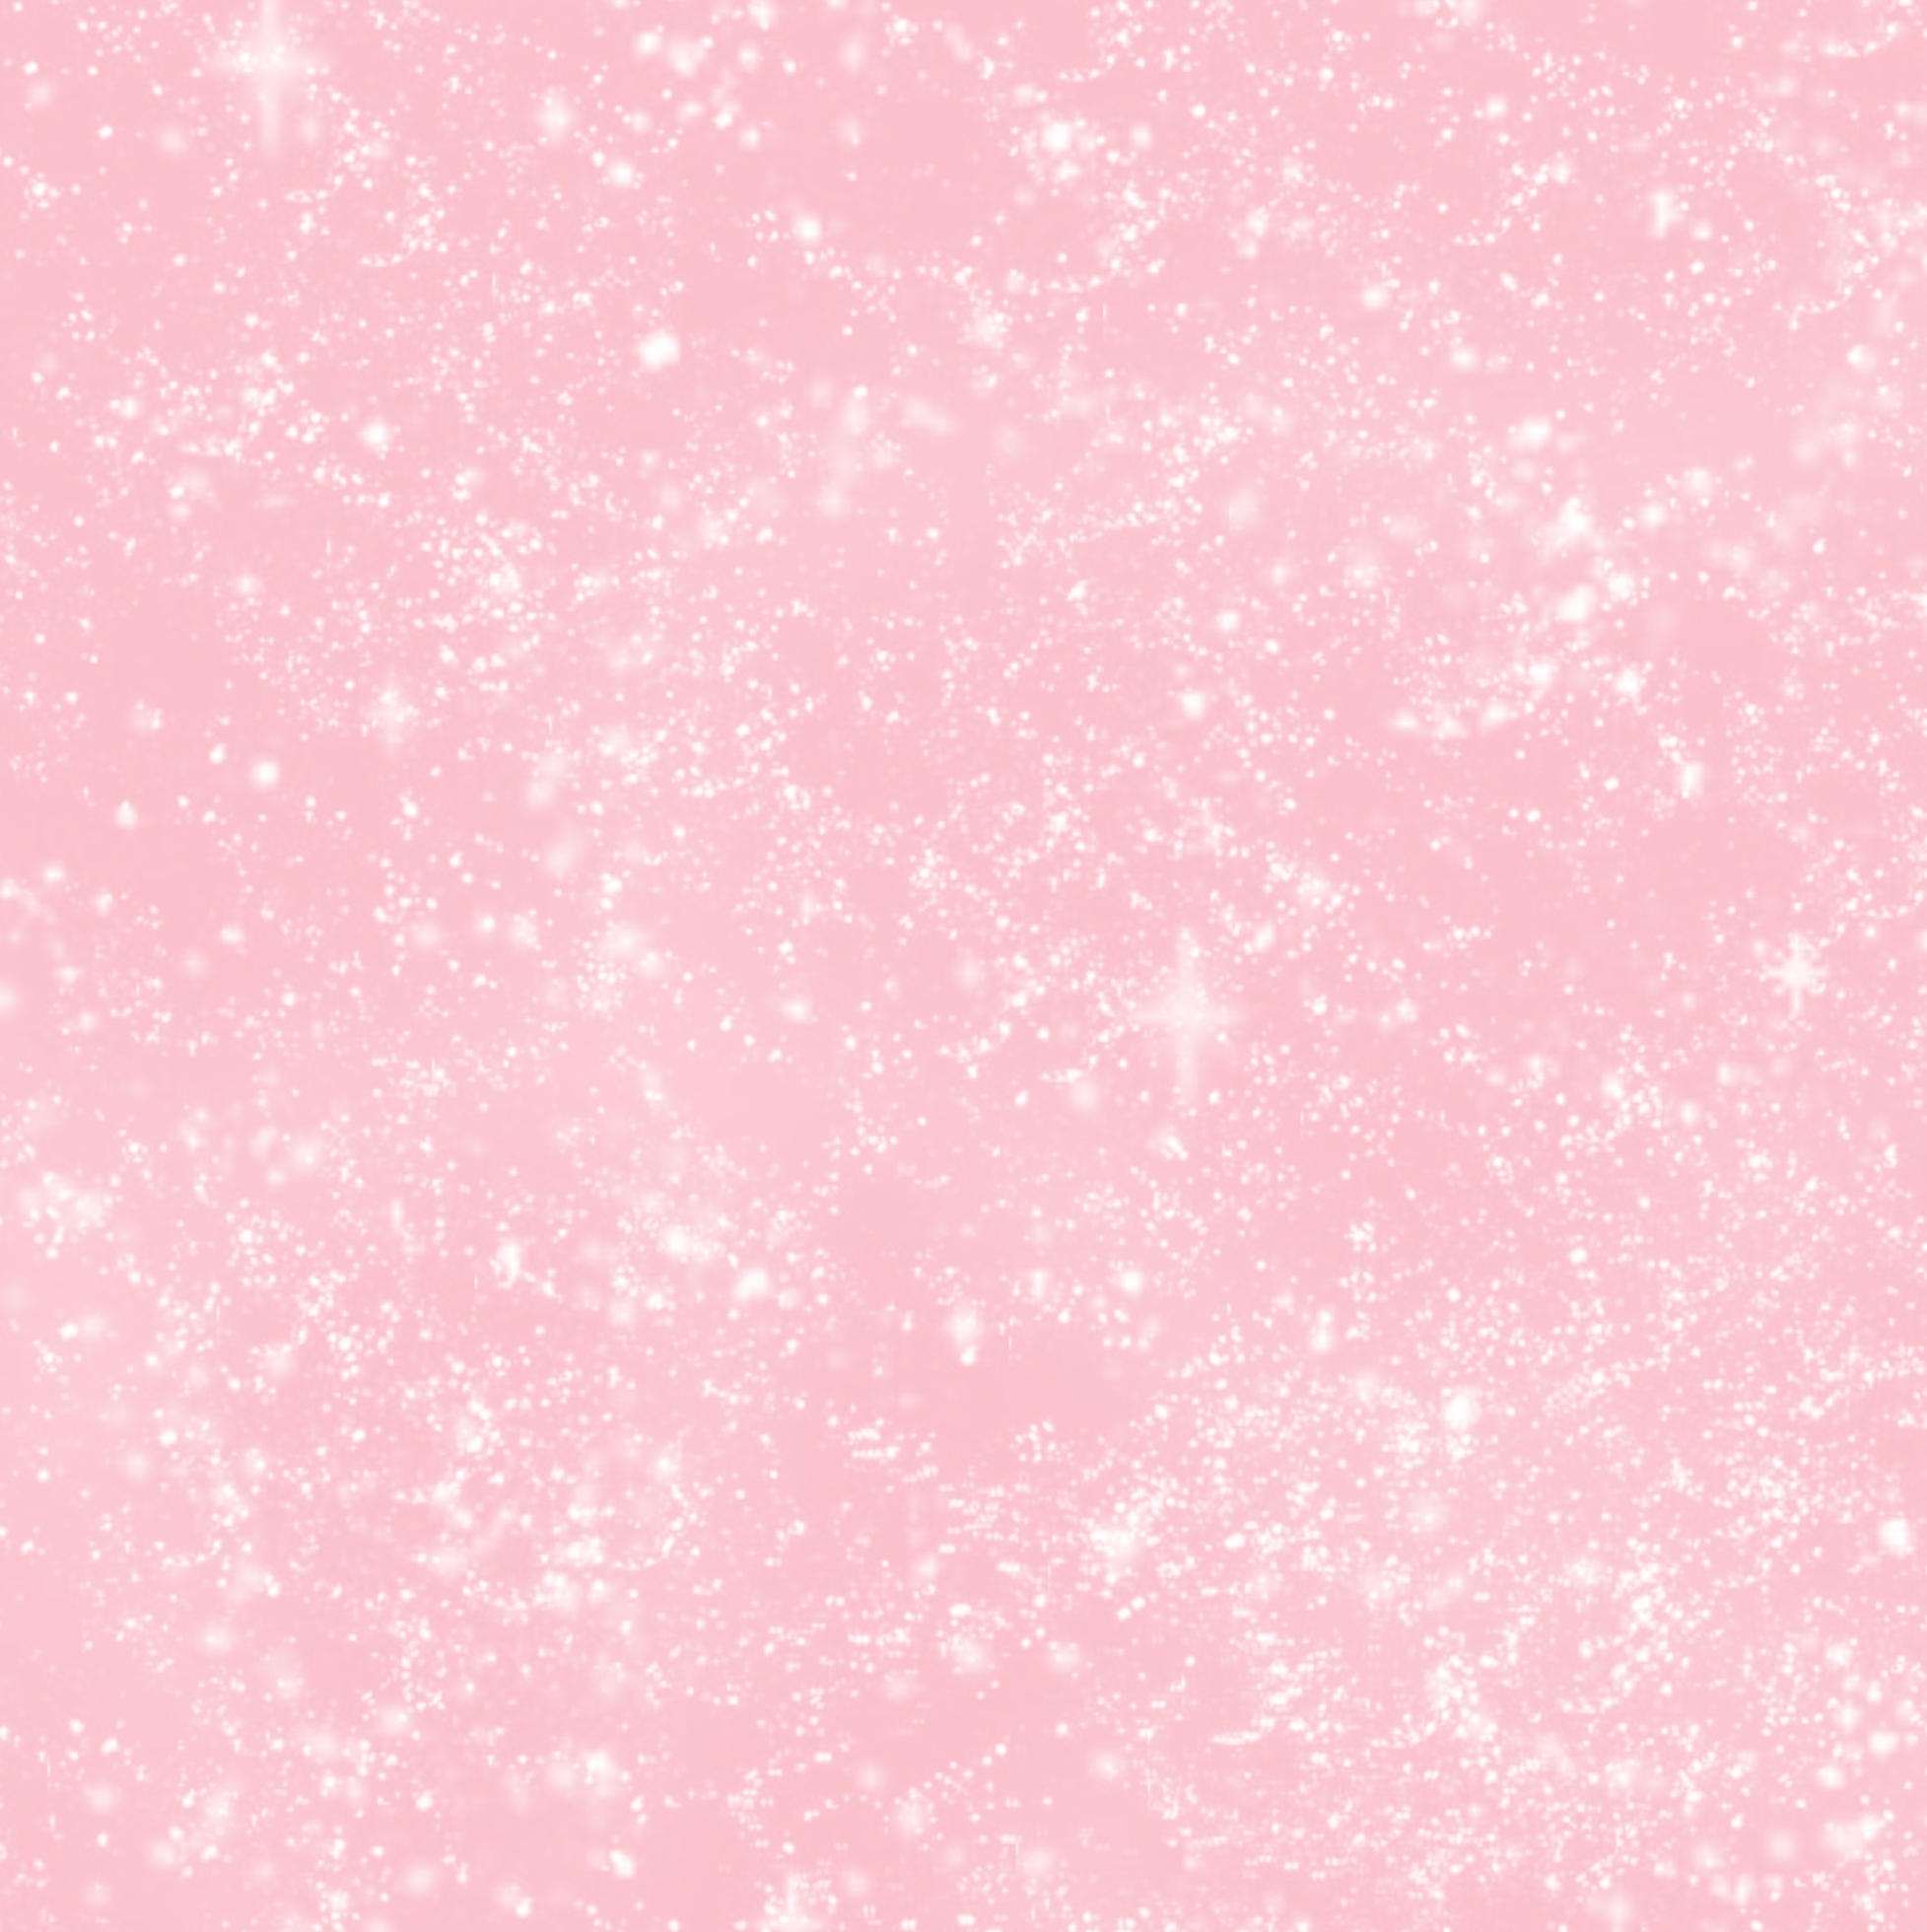 Pastel Pink Tumblr Iphone Wallpapers